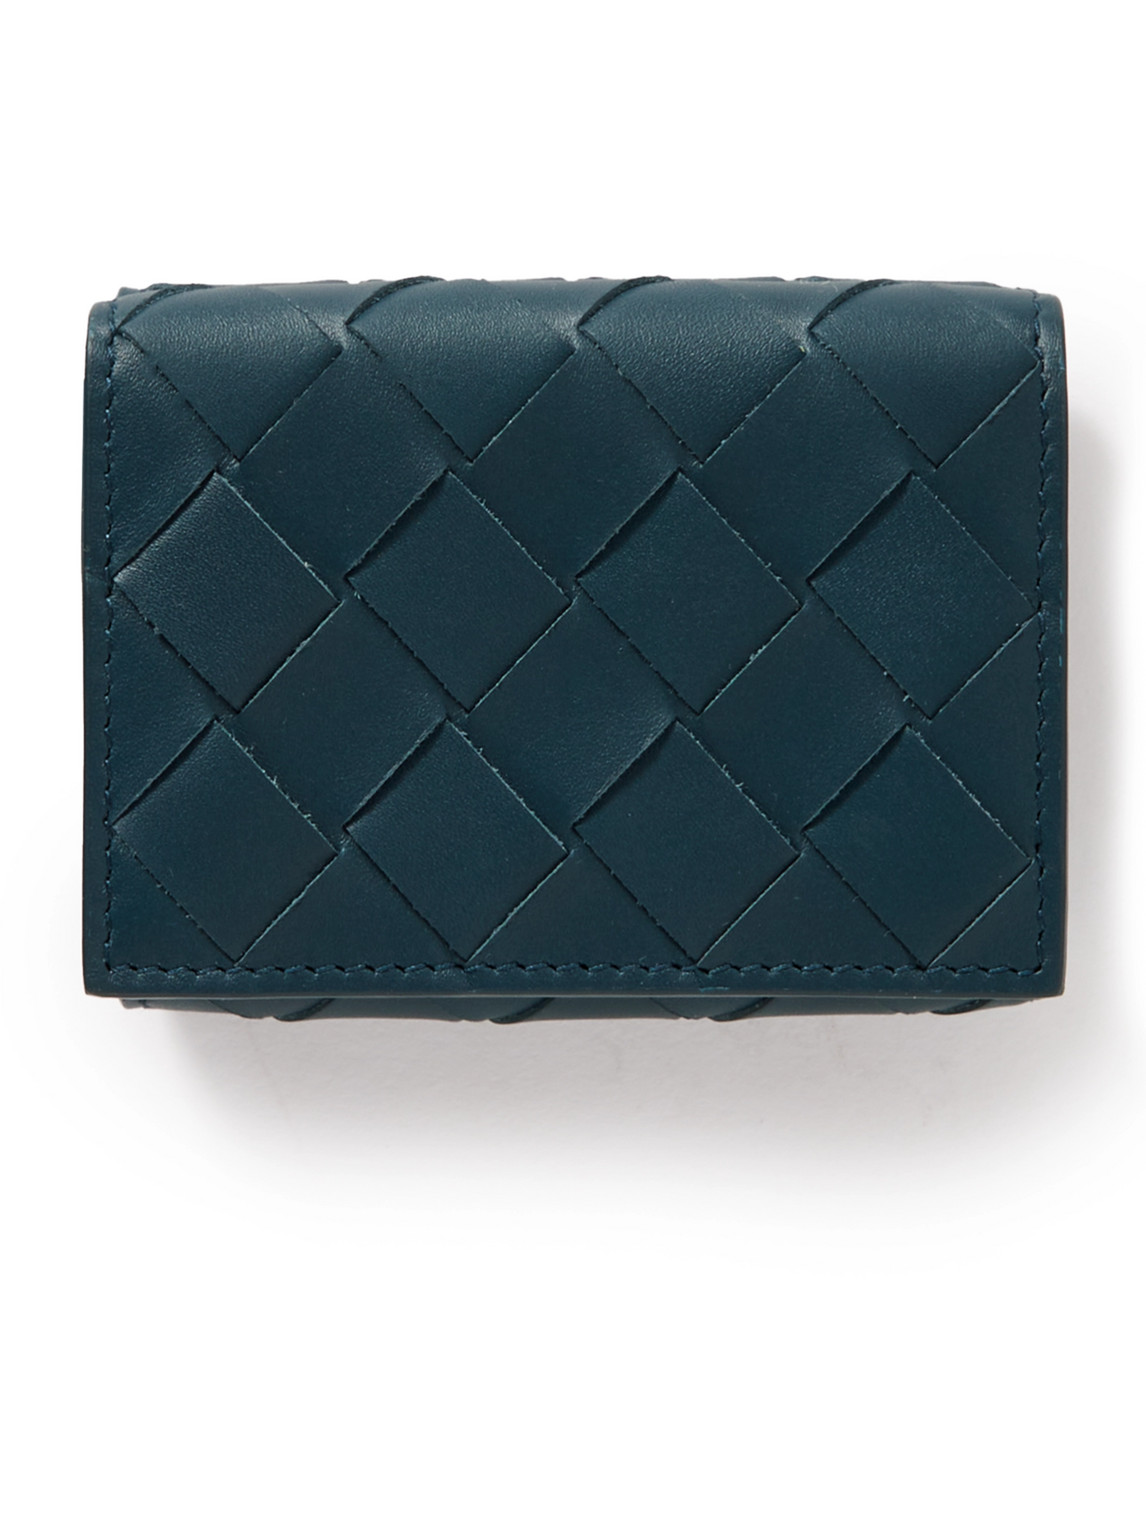 Bottega Veneta Intrecciato Leather Trifold Wallet In Blue